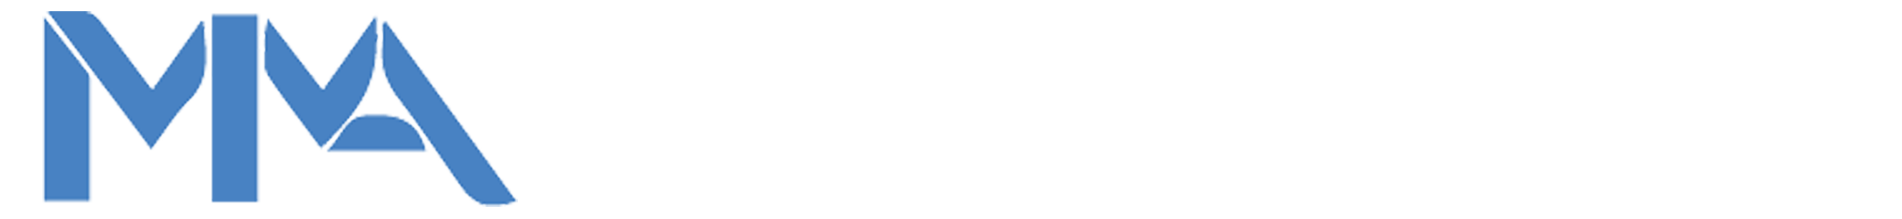 Assignment Help uk